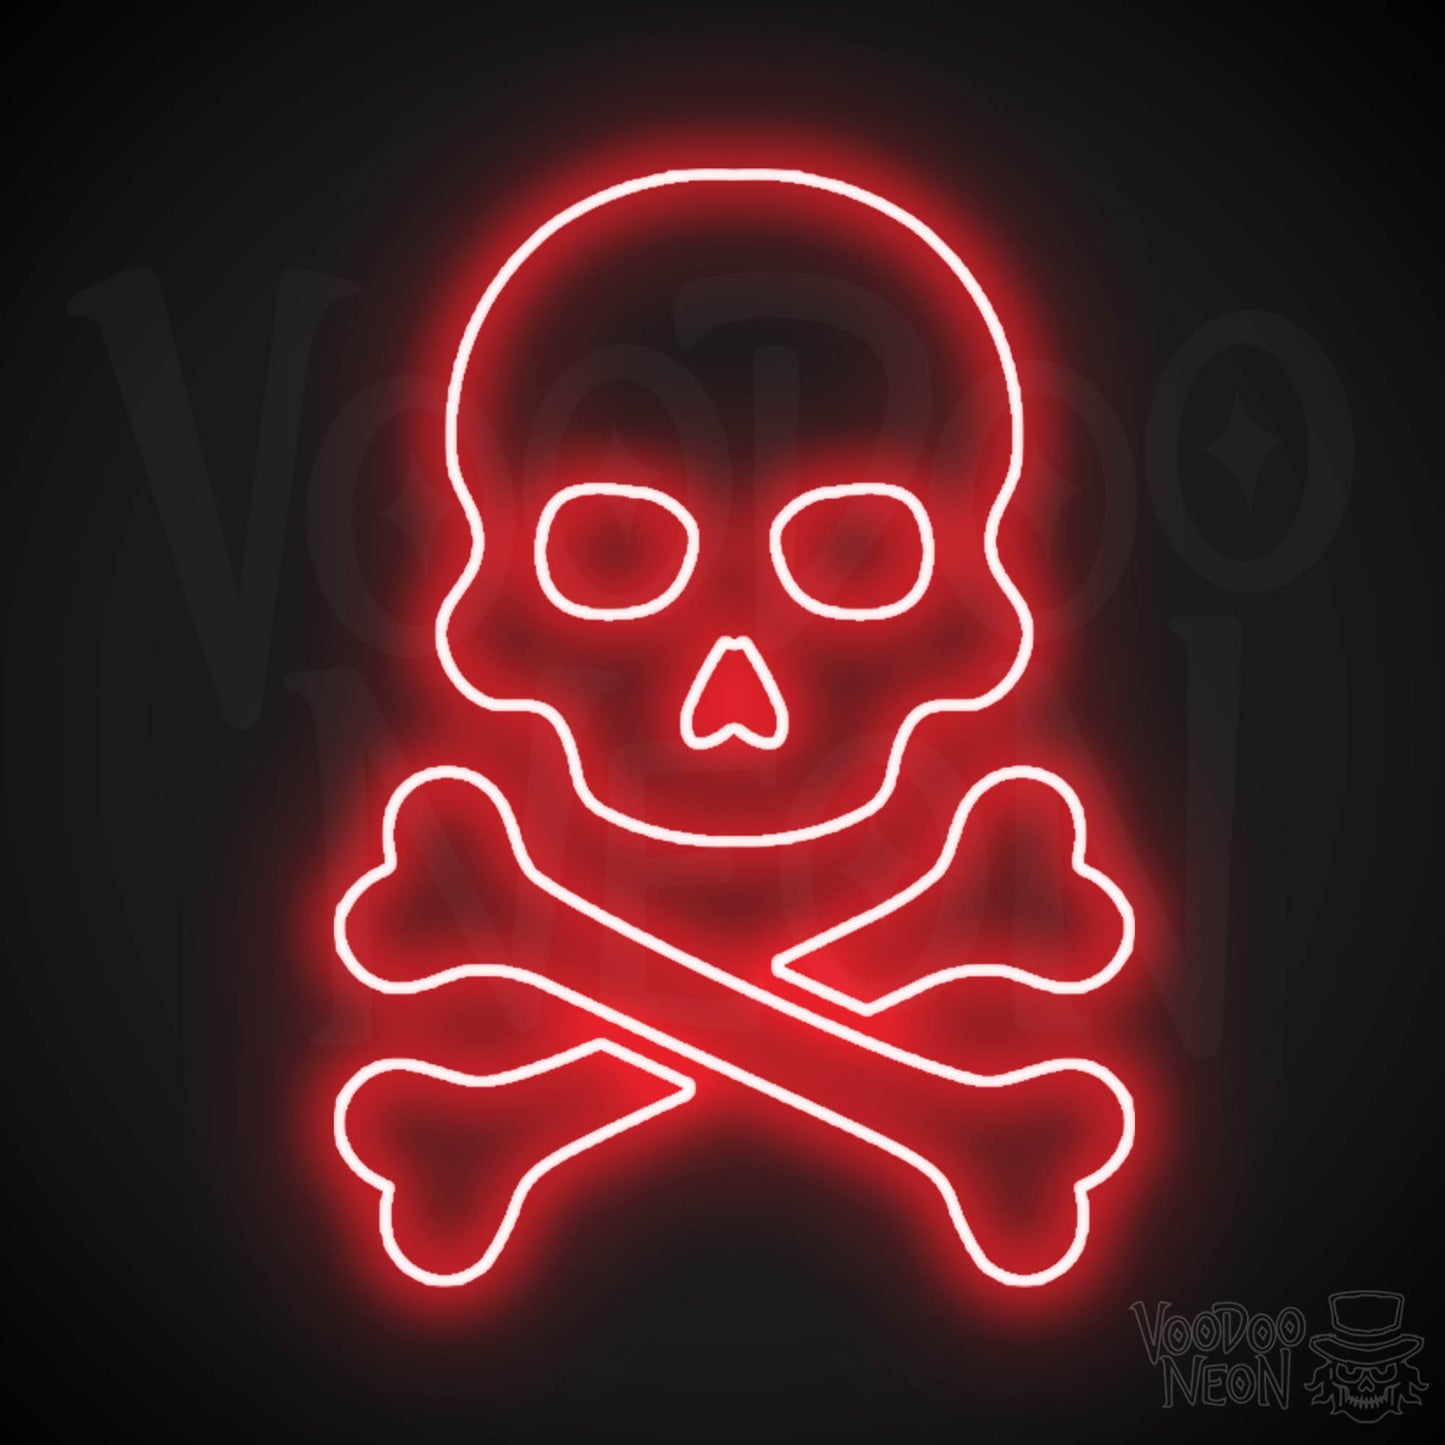 Pirate Skull & Crossbones Neon Sign - Neon Pirate Skull & Crossbones Sign - LED Lights - Color Red